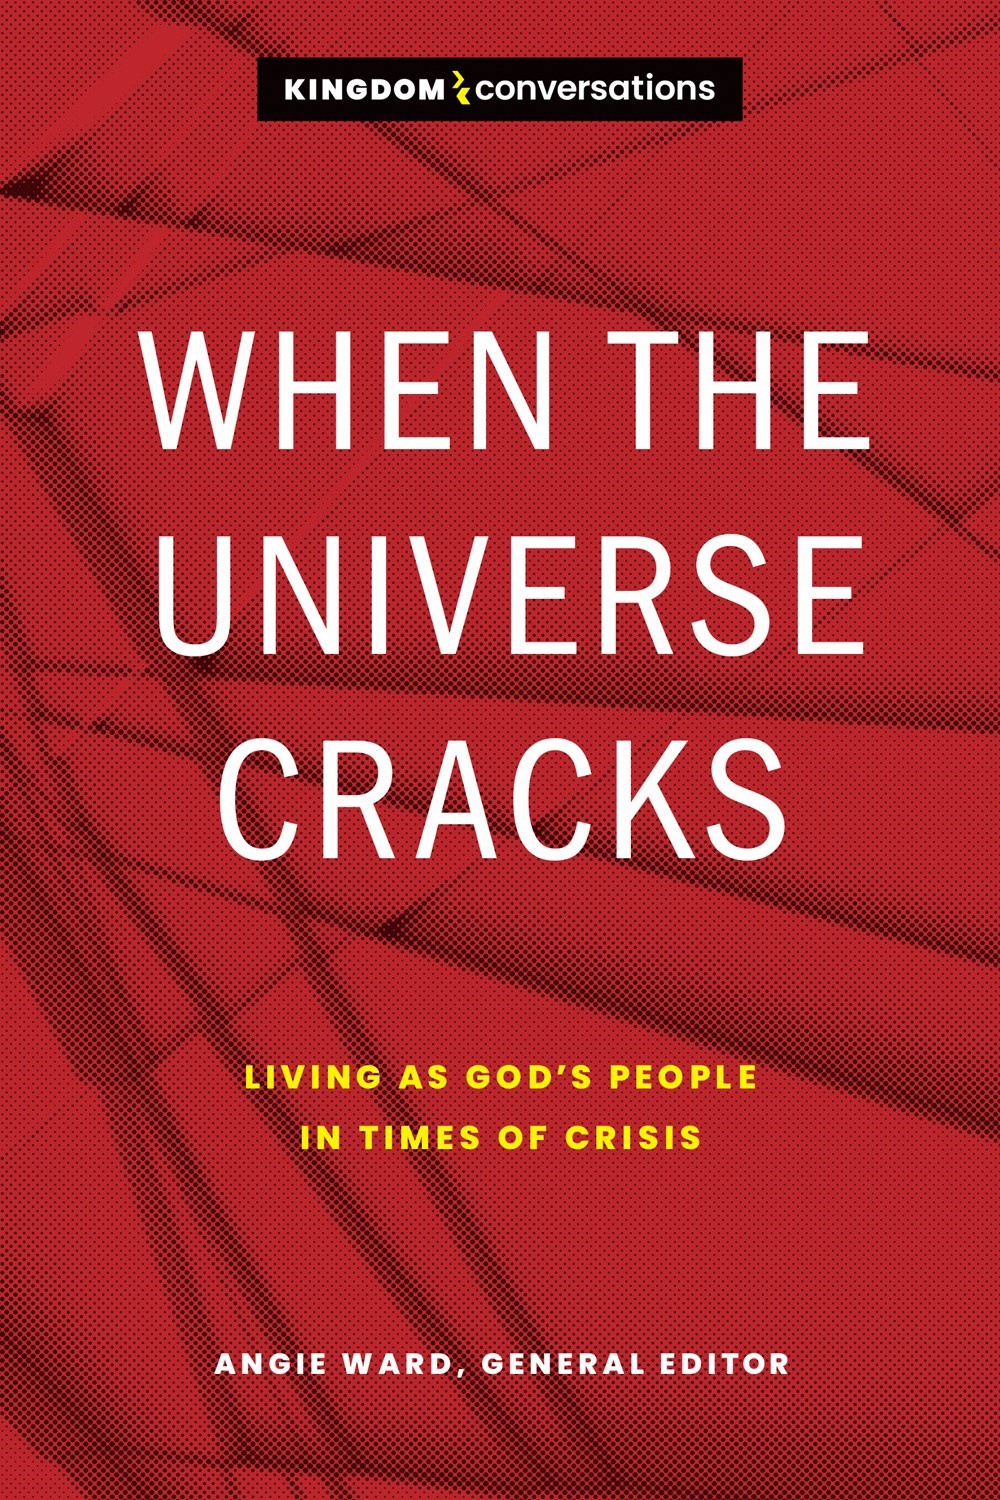 When The Universe Cracks